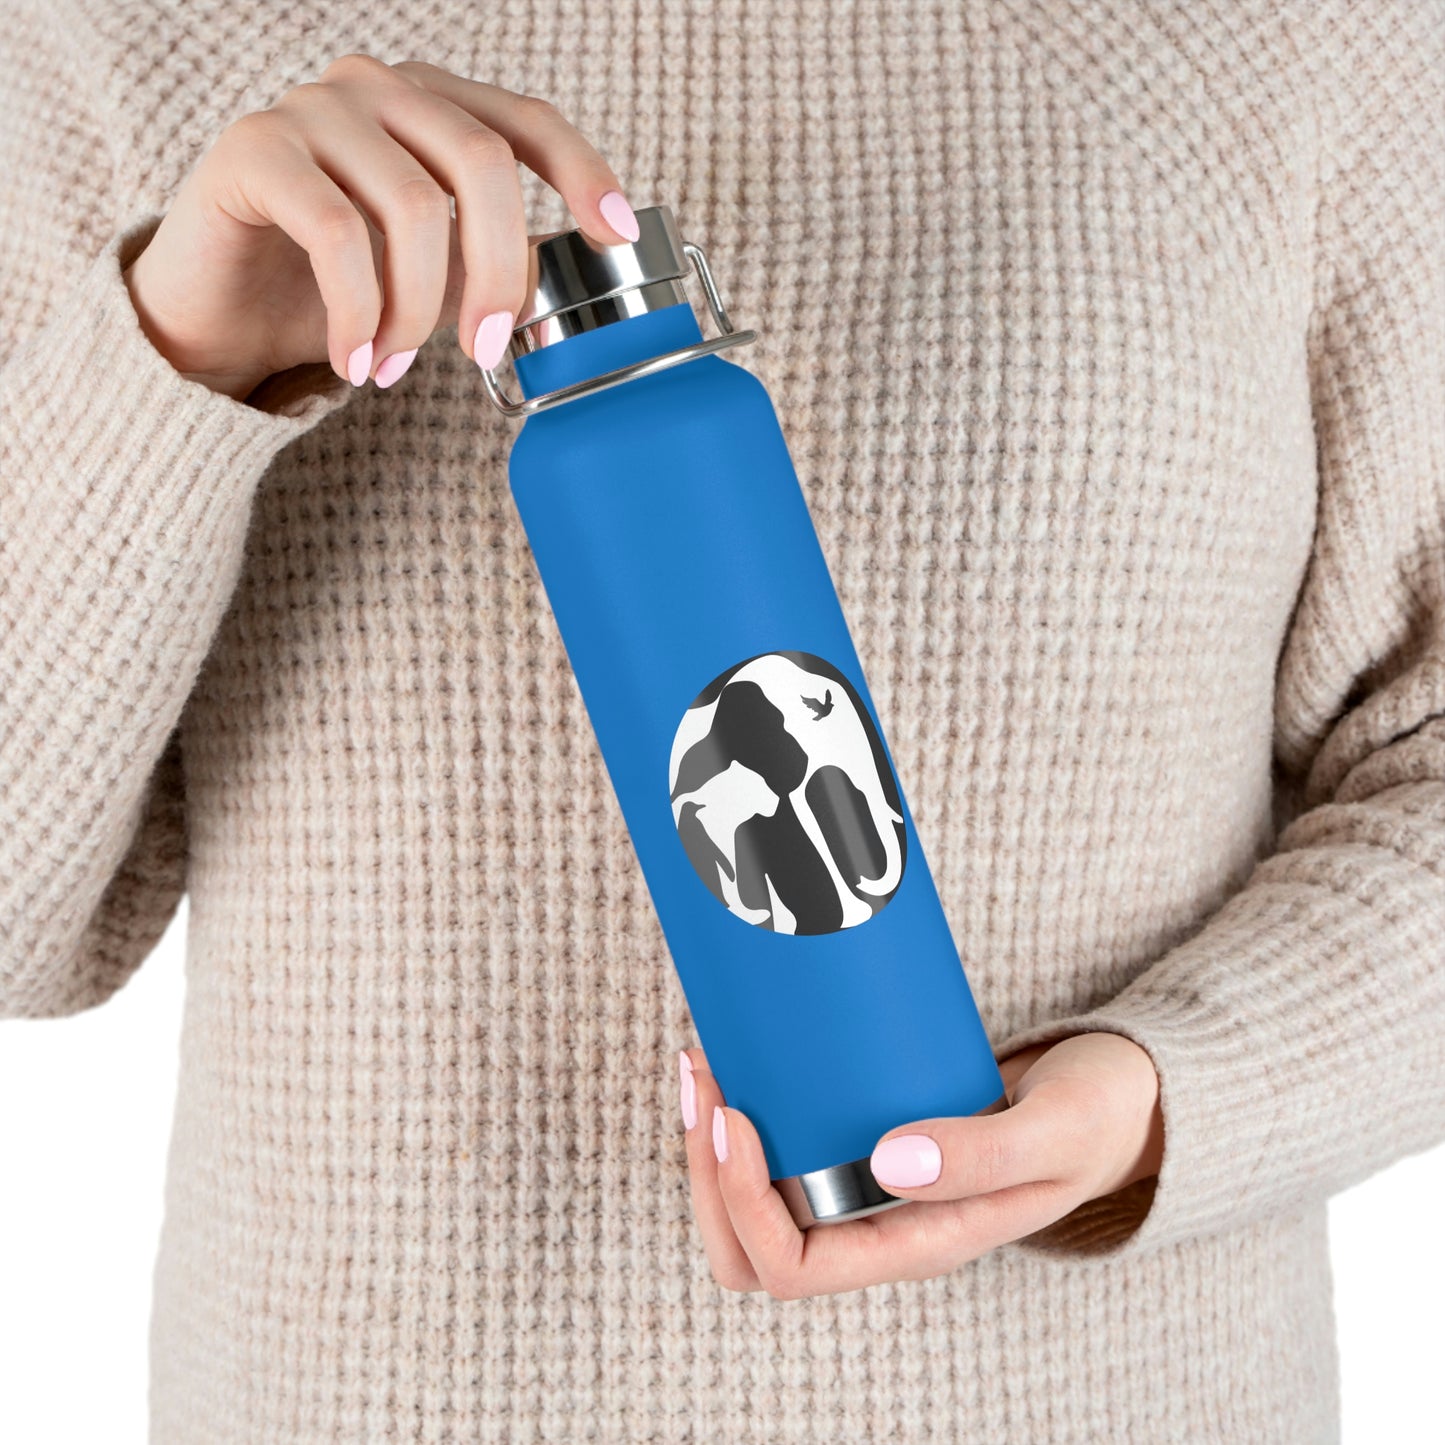 Wildlife Wonders Vacuum Insulated Bottle